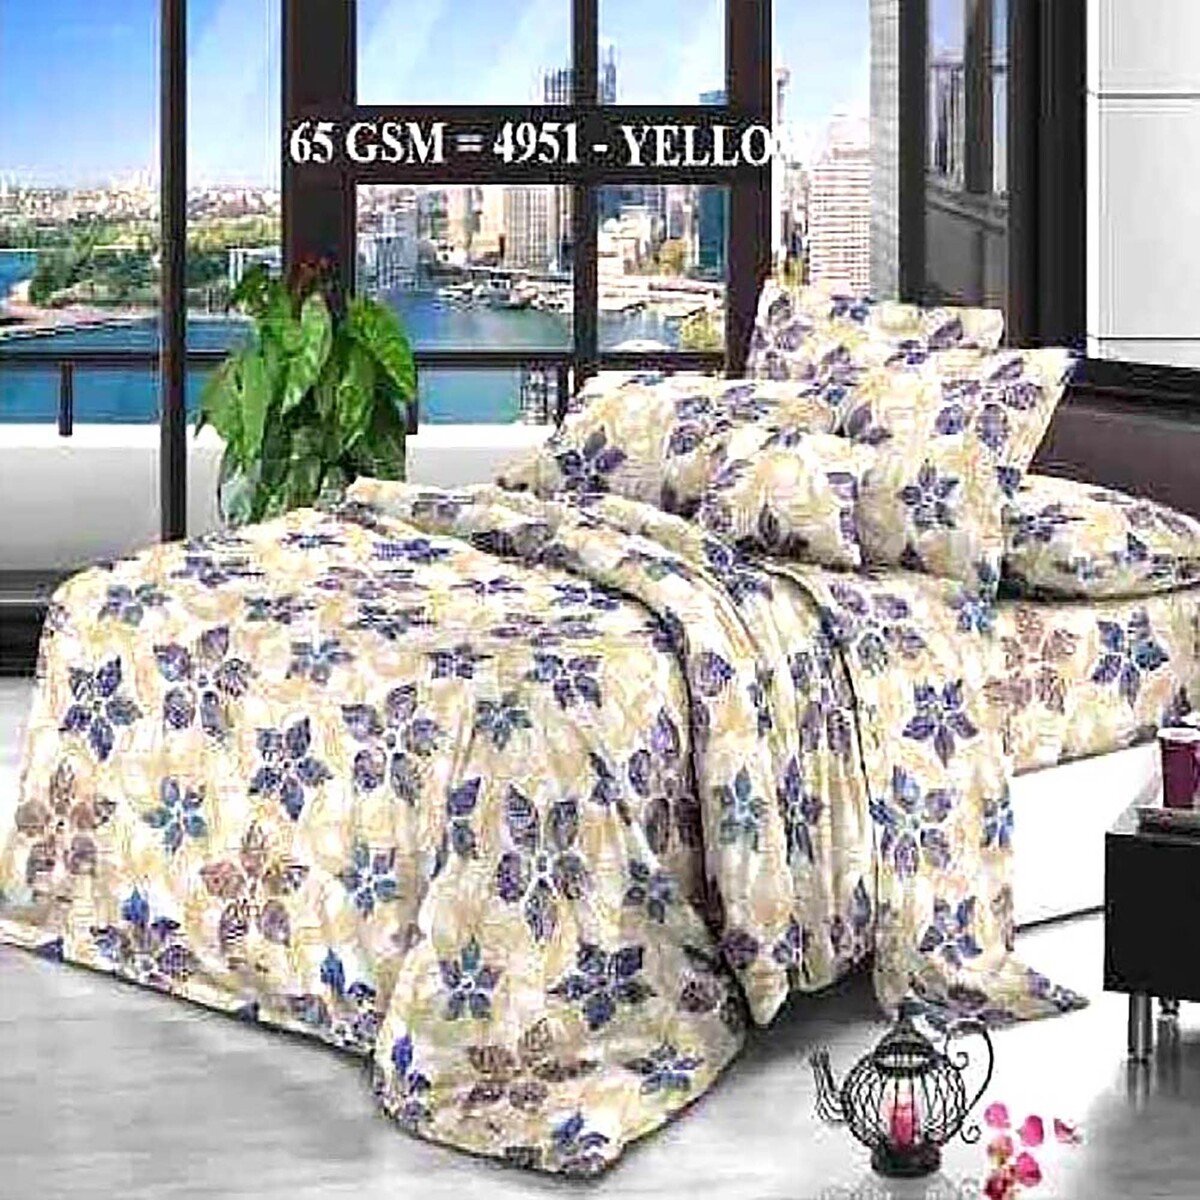 Peaceful Premium Comforter 6pcs Set 65GSM Double 220x240cm Yellow